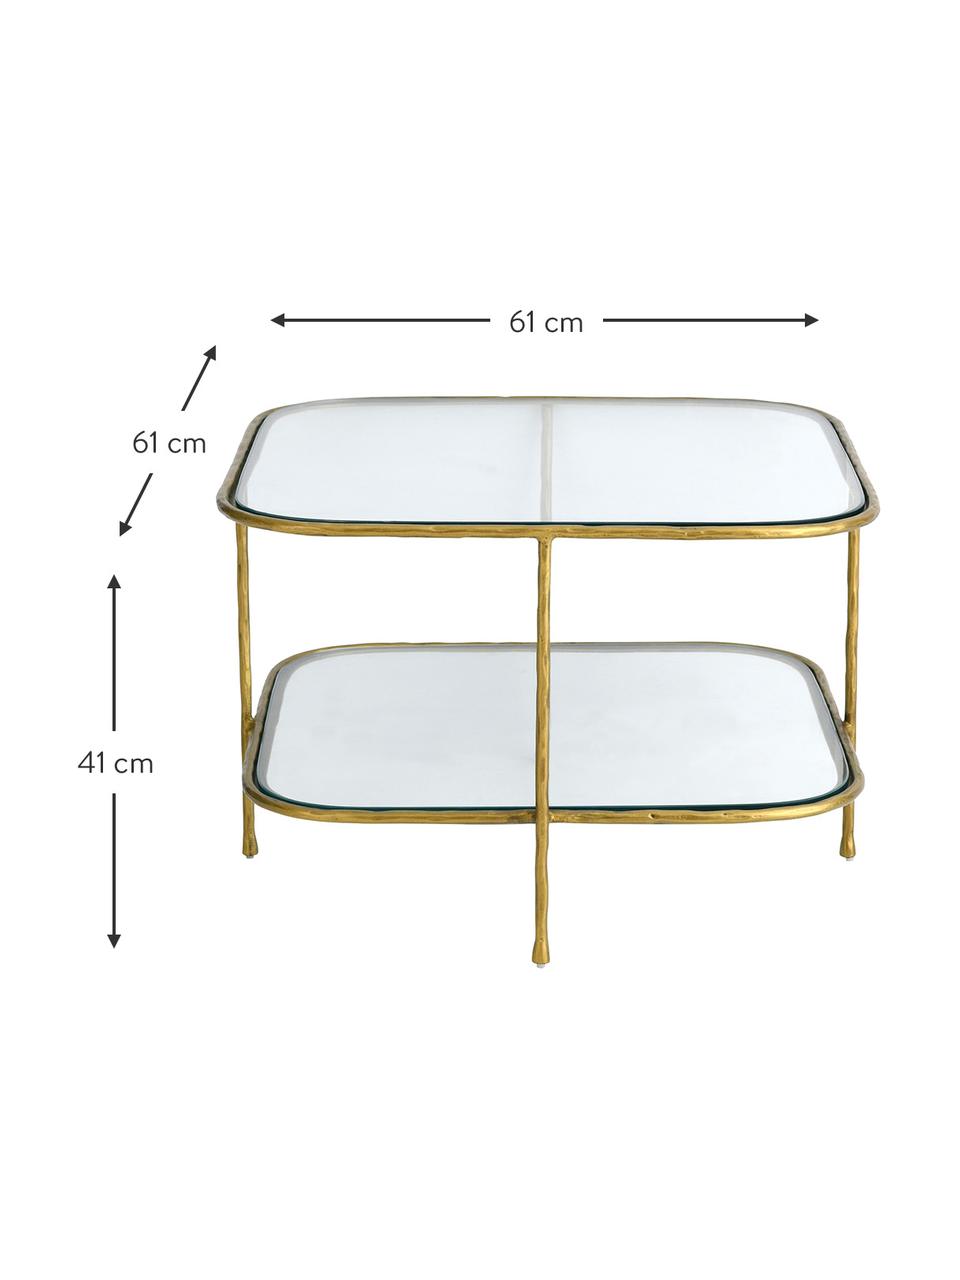 Sklenený konferenčný stolík Petit, Odtiene zlatej, Š 61 x H 61 cm